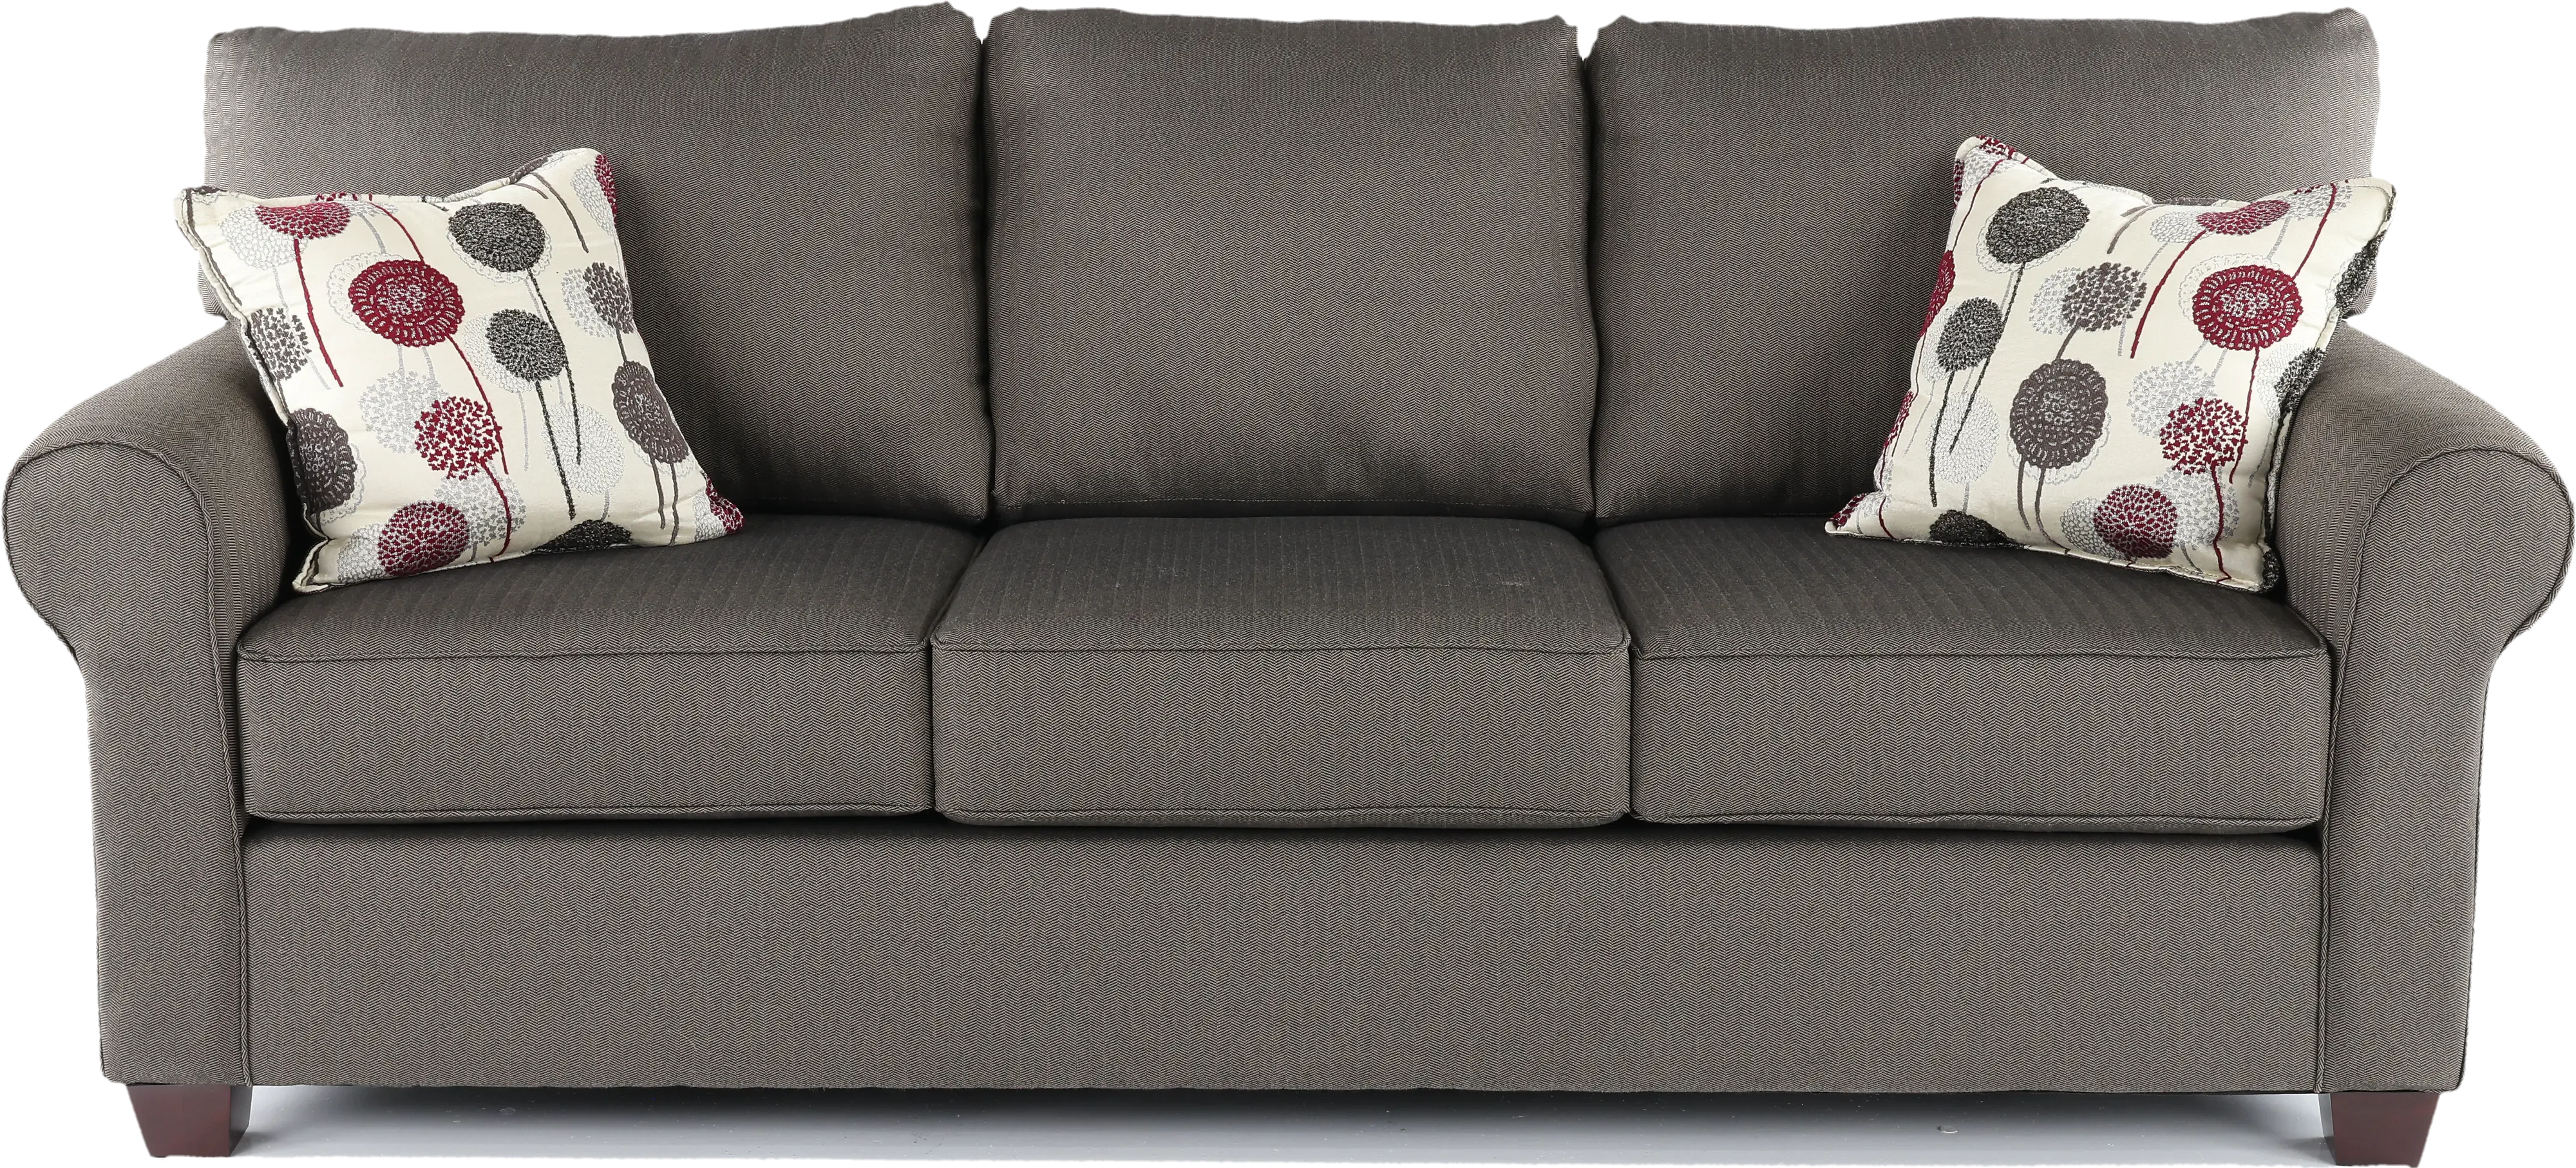 Grey Sofa with Gold Throw Pillows, 50% Off